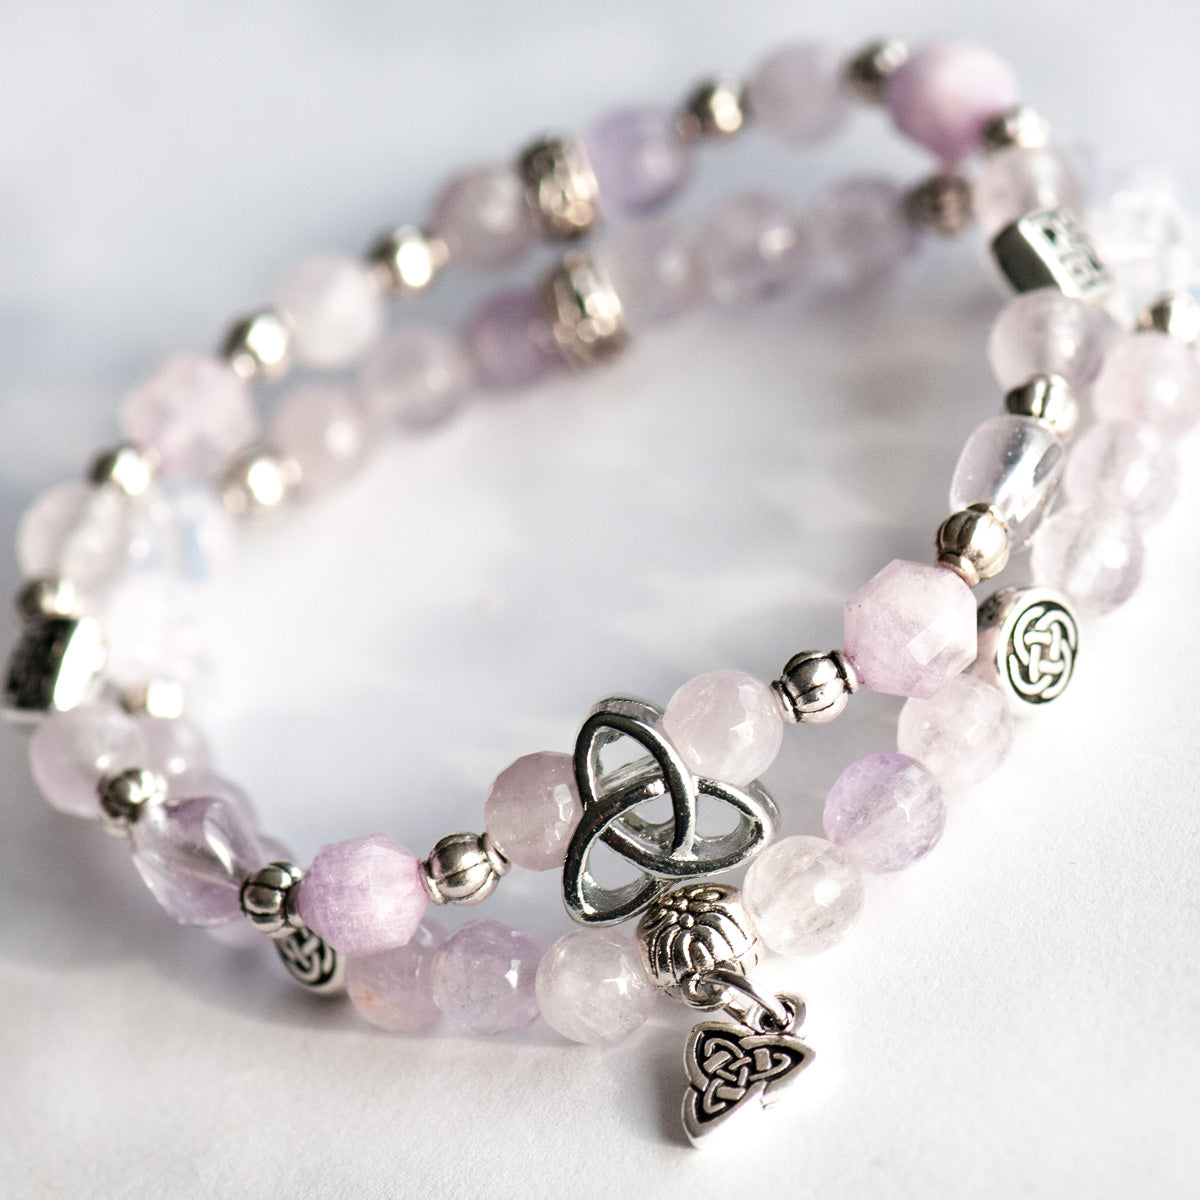 Trinity bracelet set in lavender amethyst handmade in New Brunswick Canada